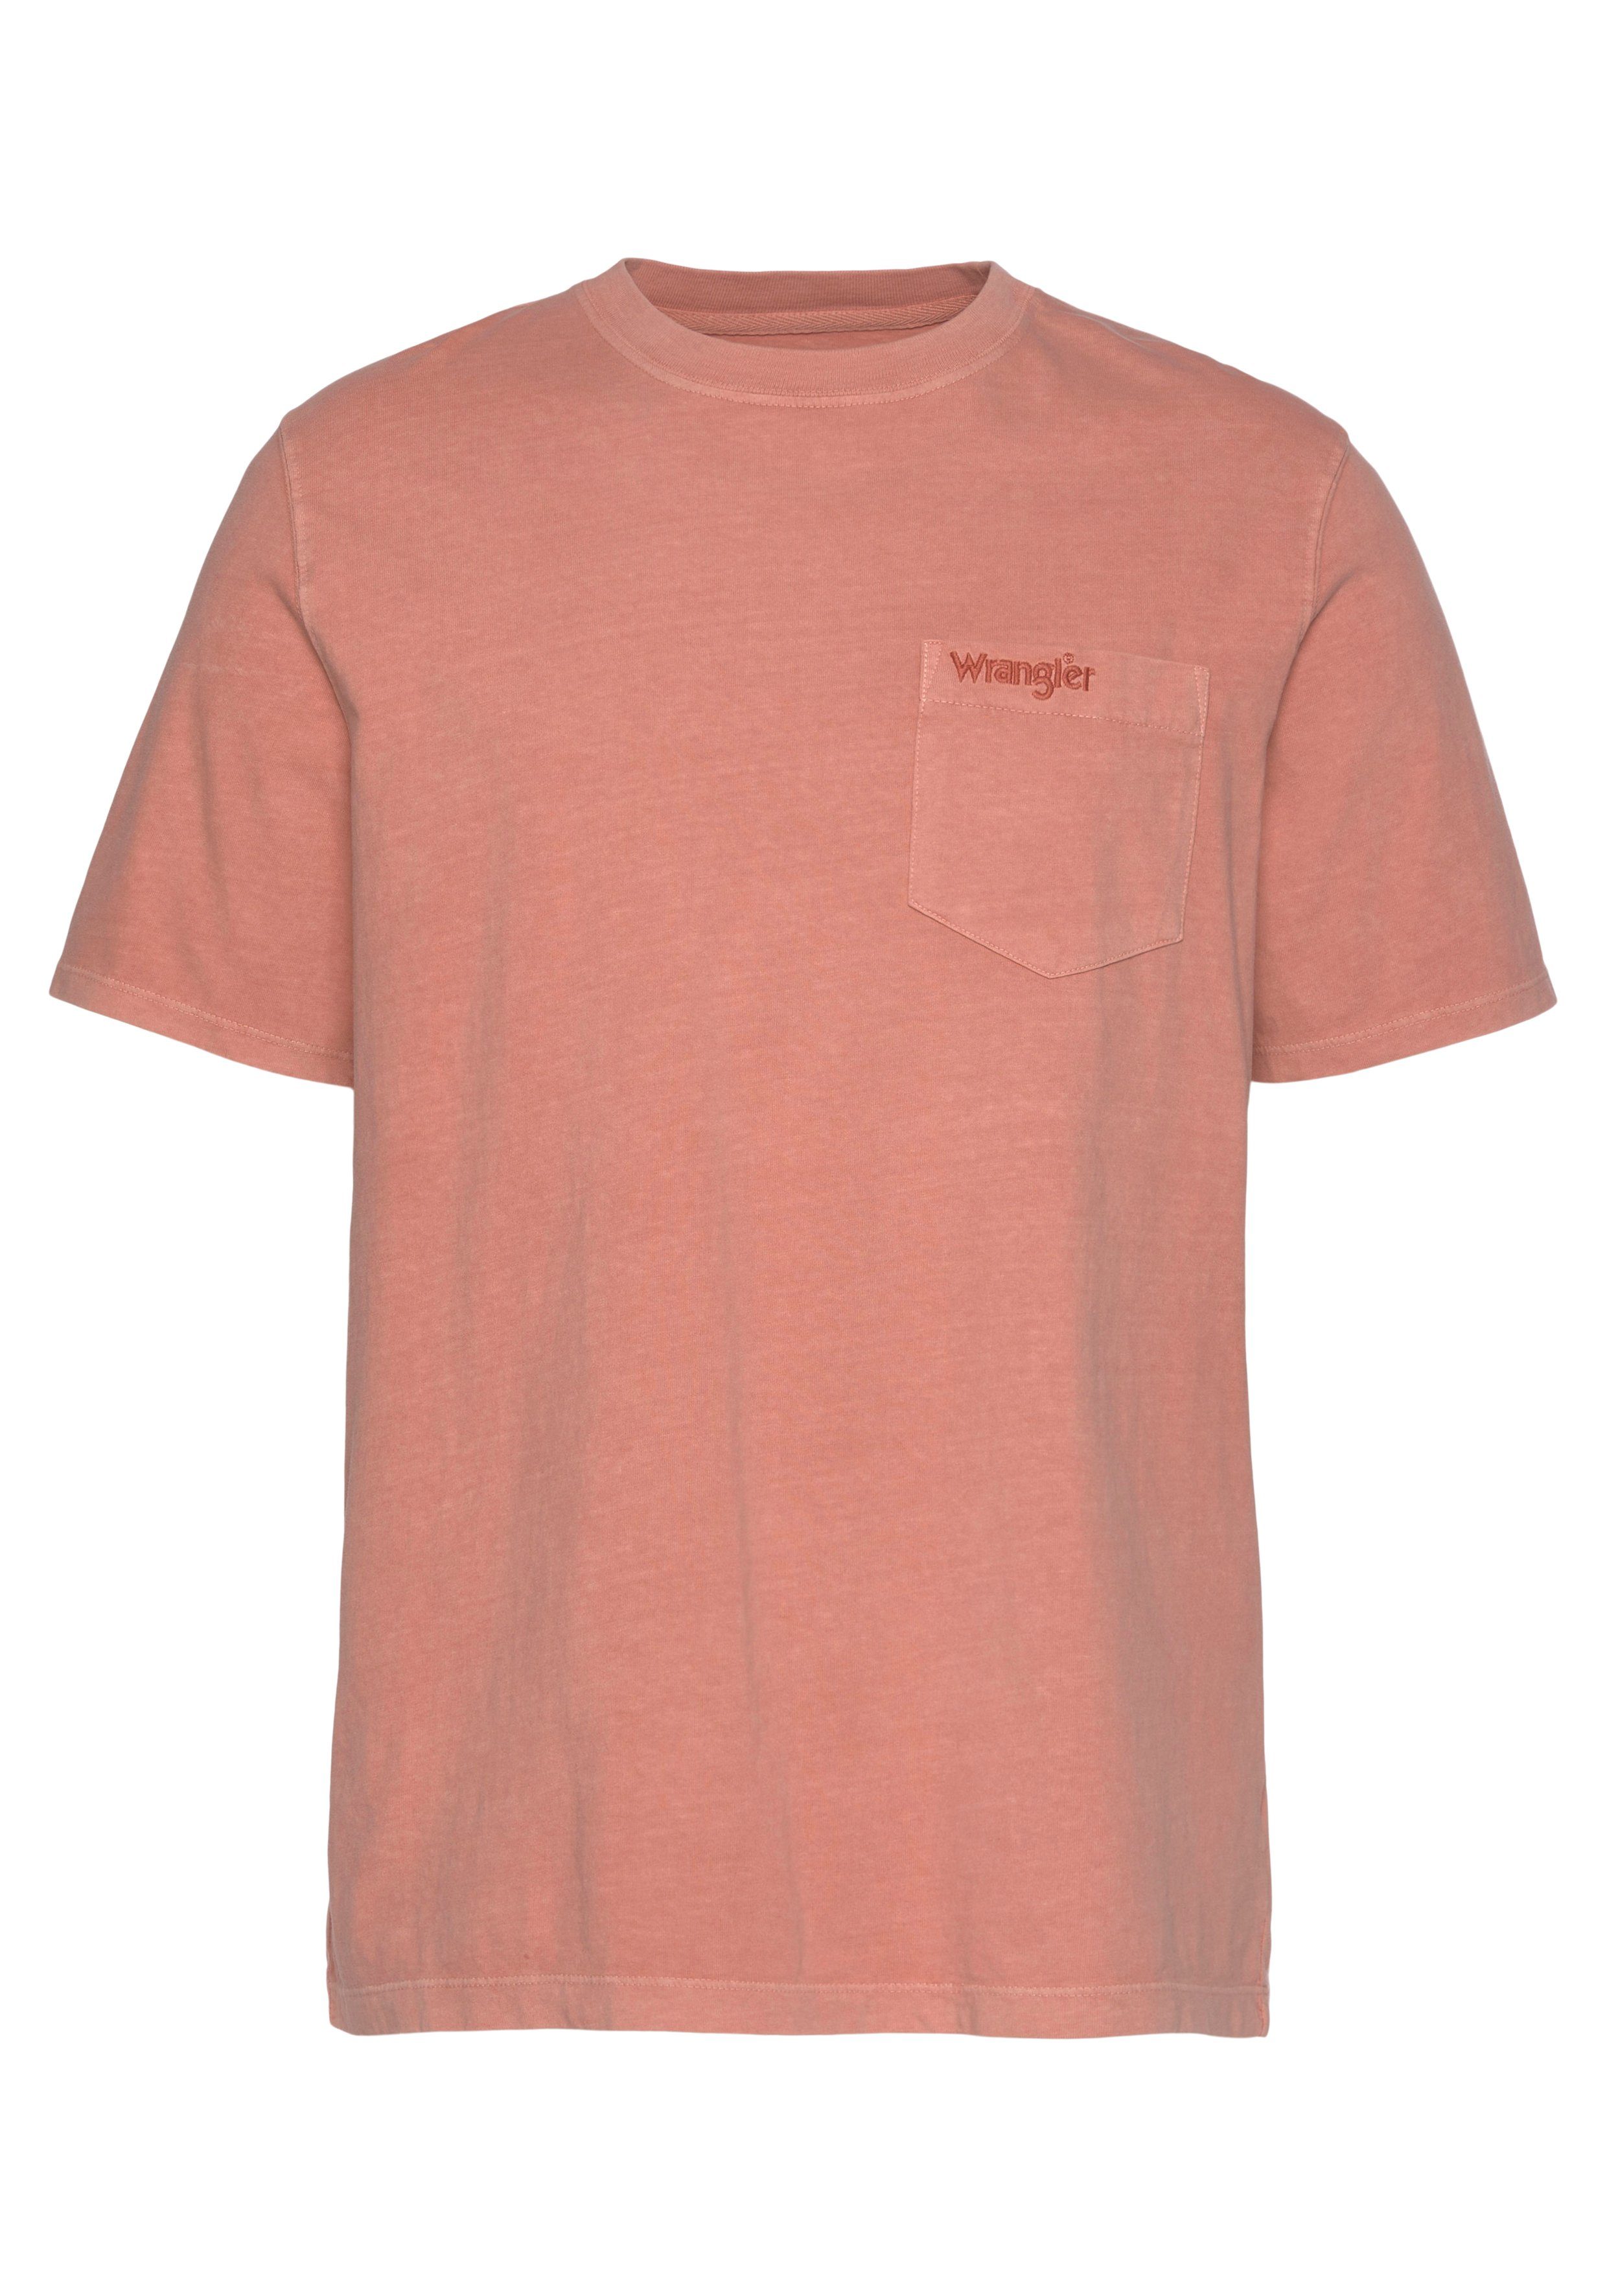 Wrangler T-Shirt Pocket Tee etruscan red